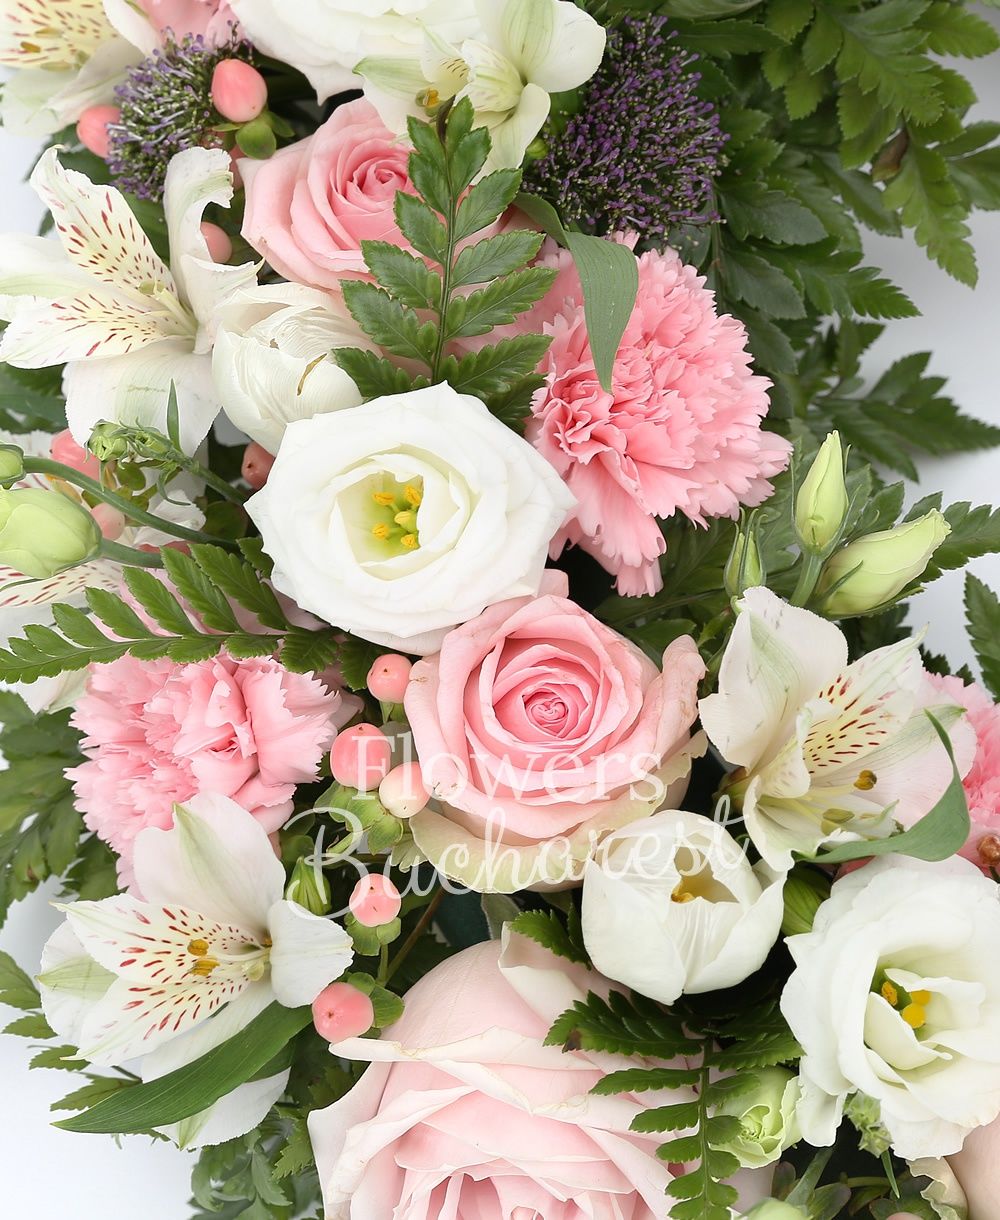 10 pink roses, 15 pink carnations, 5 white alstroemeria, 10 white lisianthus, 10 pink hypericum, 10 white tulips, 10 mauve trachelium, greenery